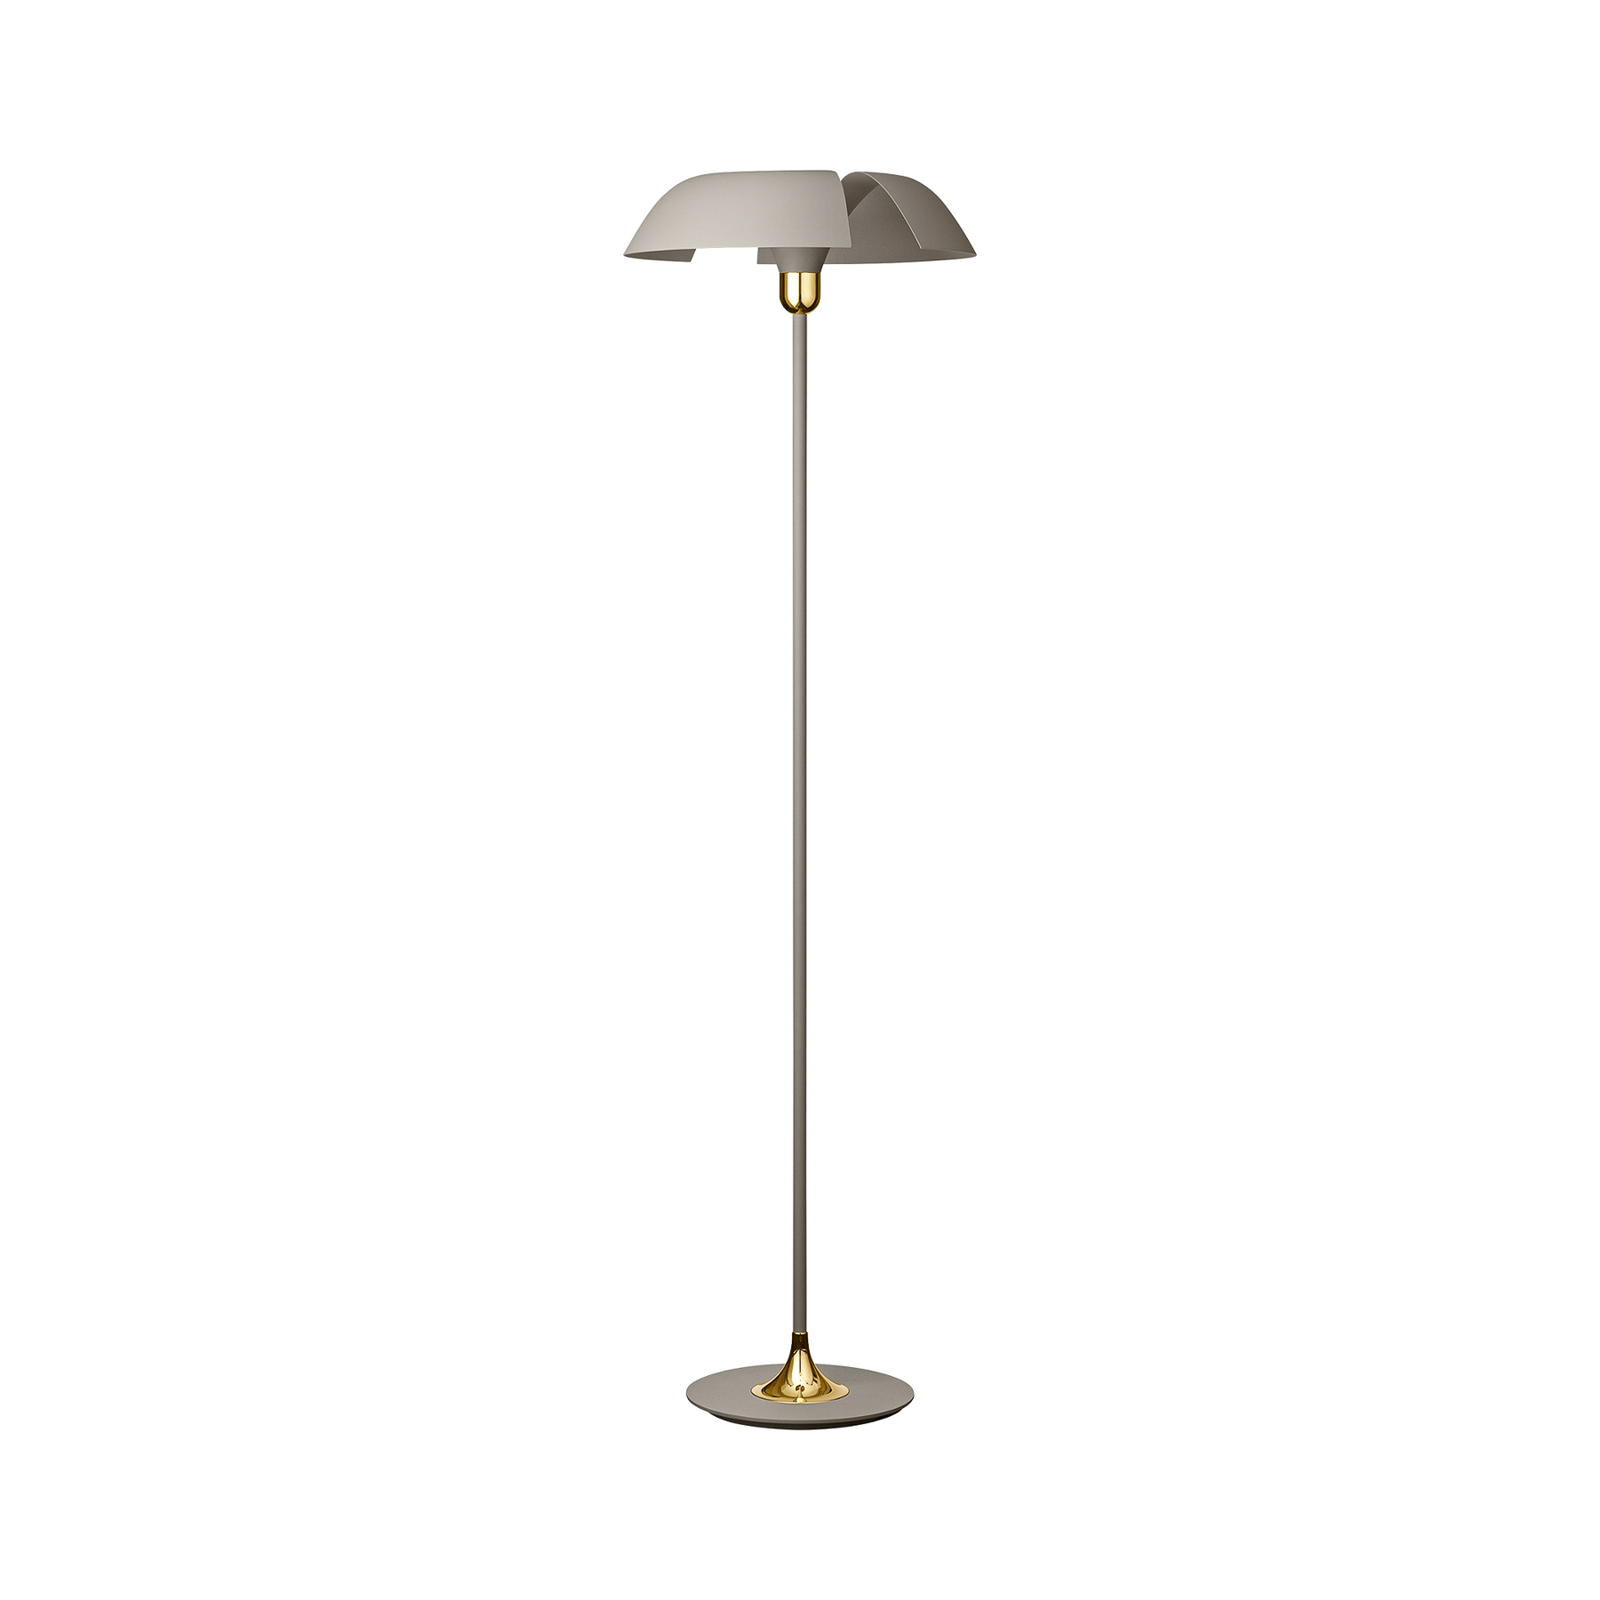 AYTM Cycnus vloerlamp, taupe, ijzer, hoogte 160 cm, E27